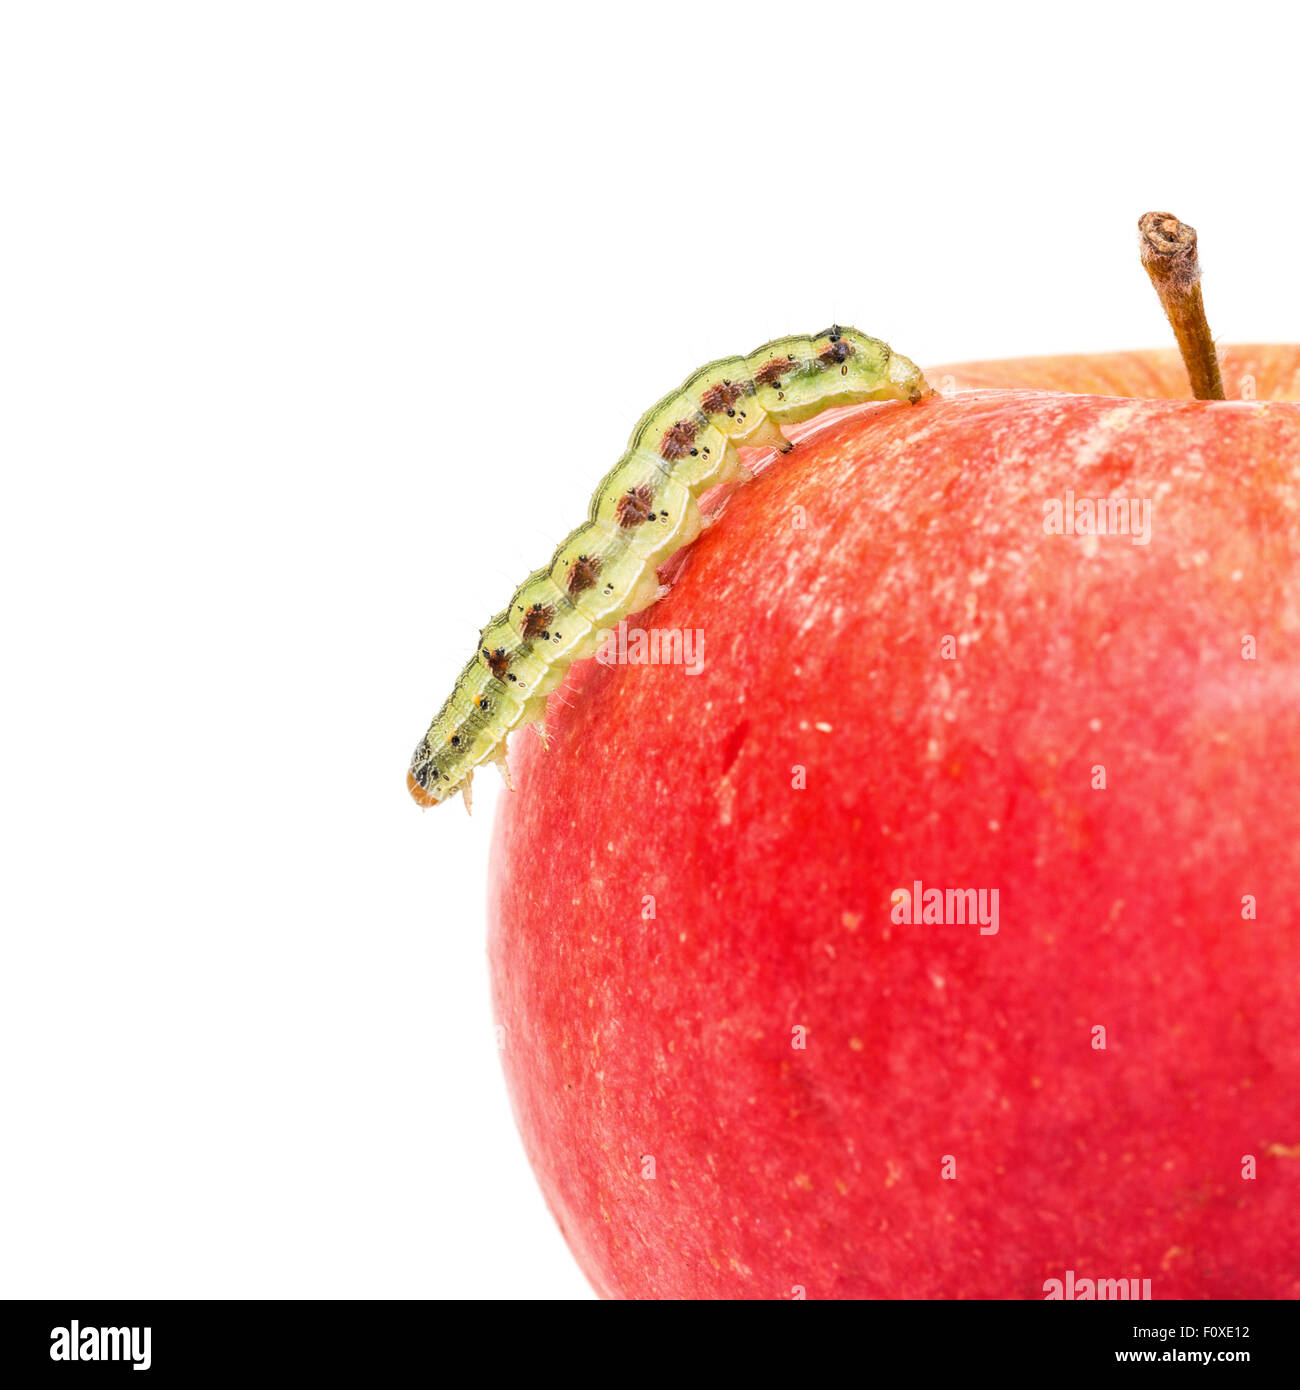 Caterpillar verde si insinua su Red Apple, sfondo bianco Foto Stock